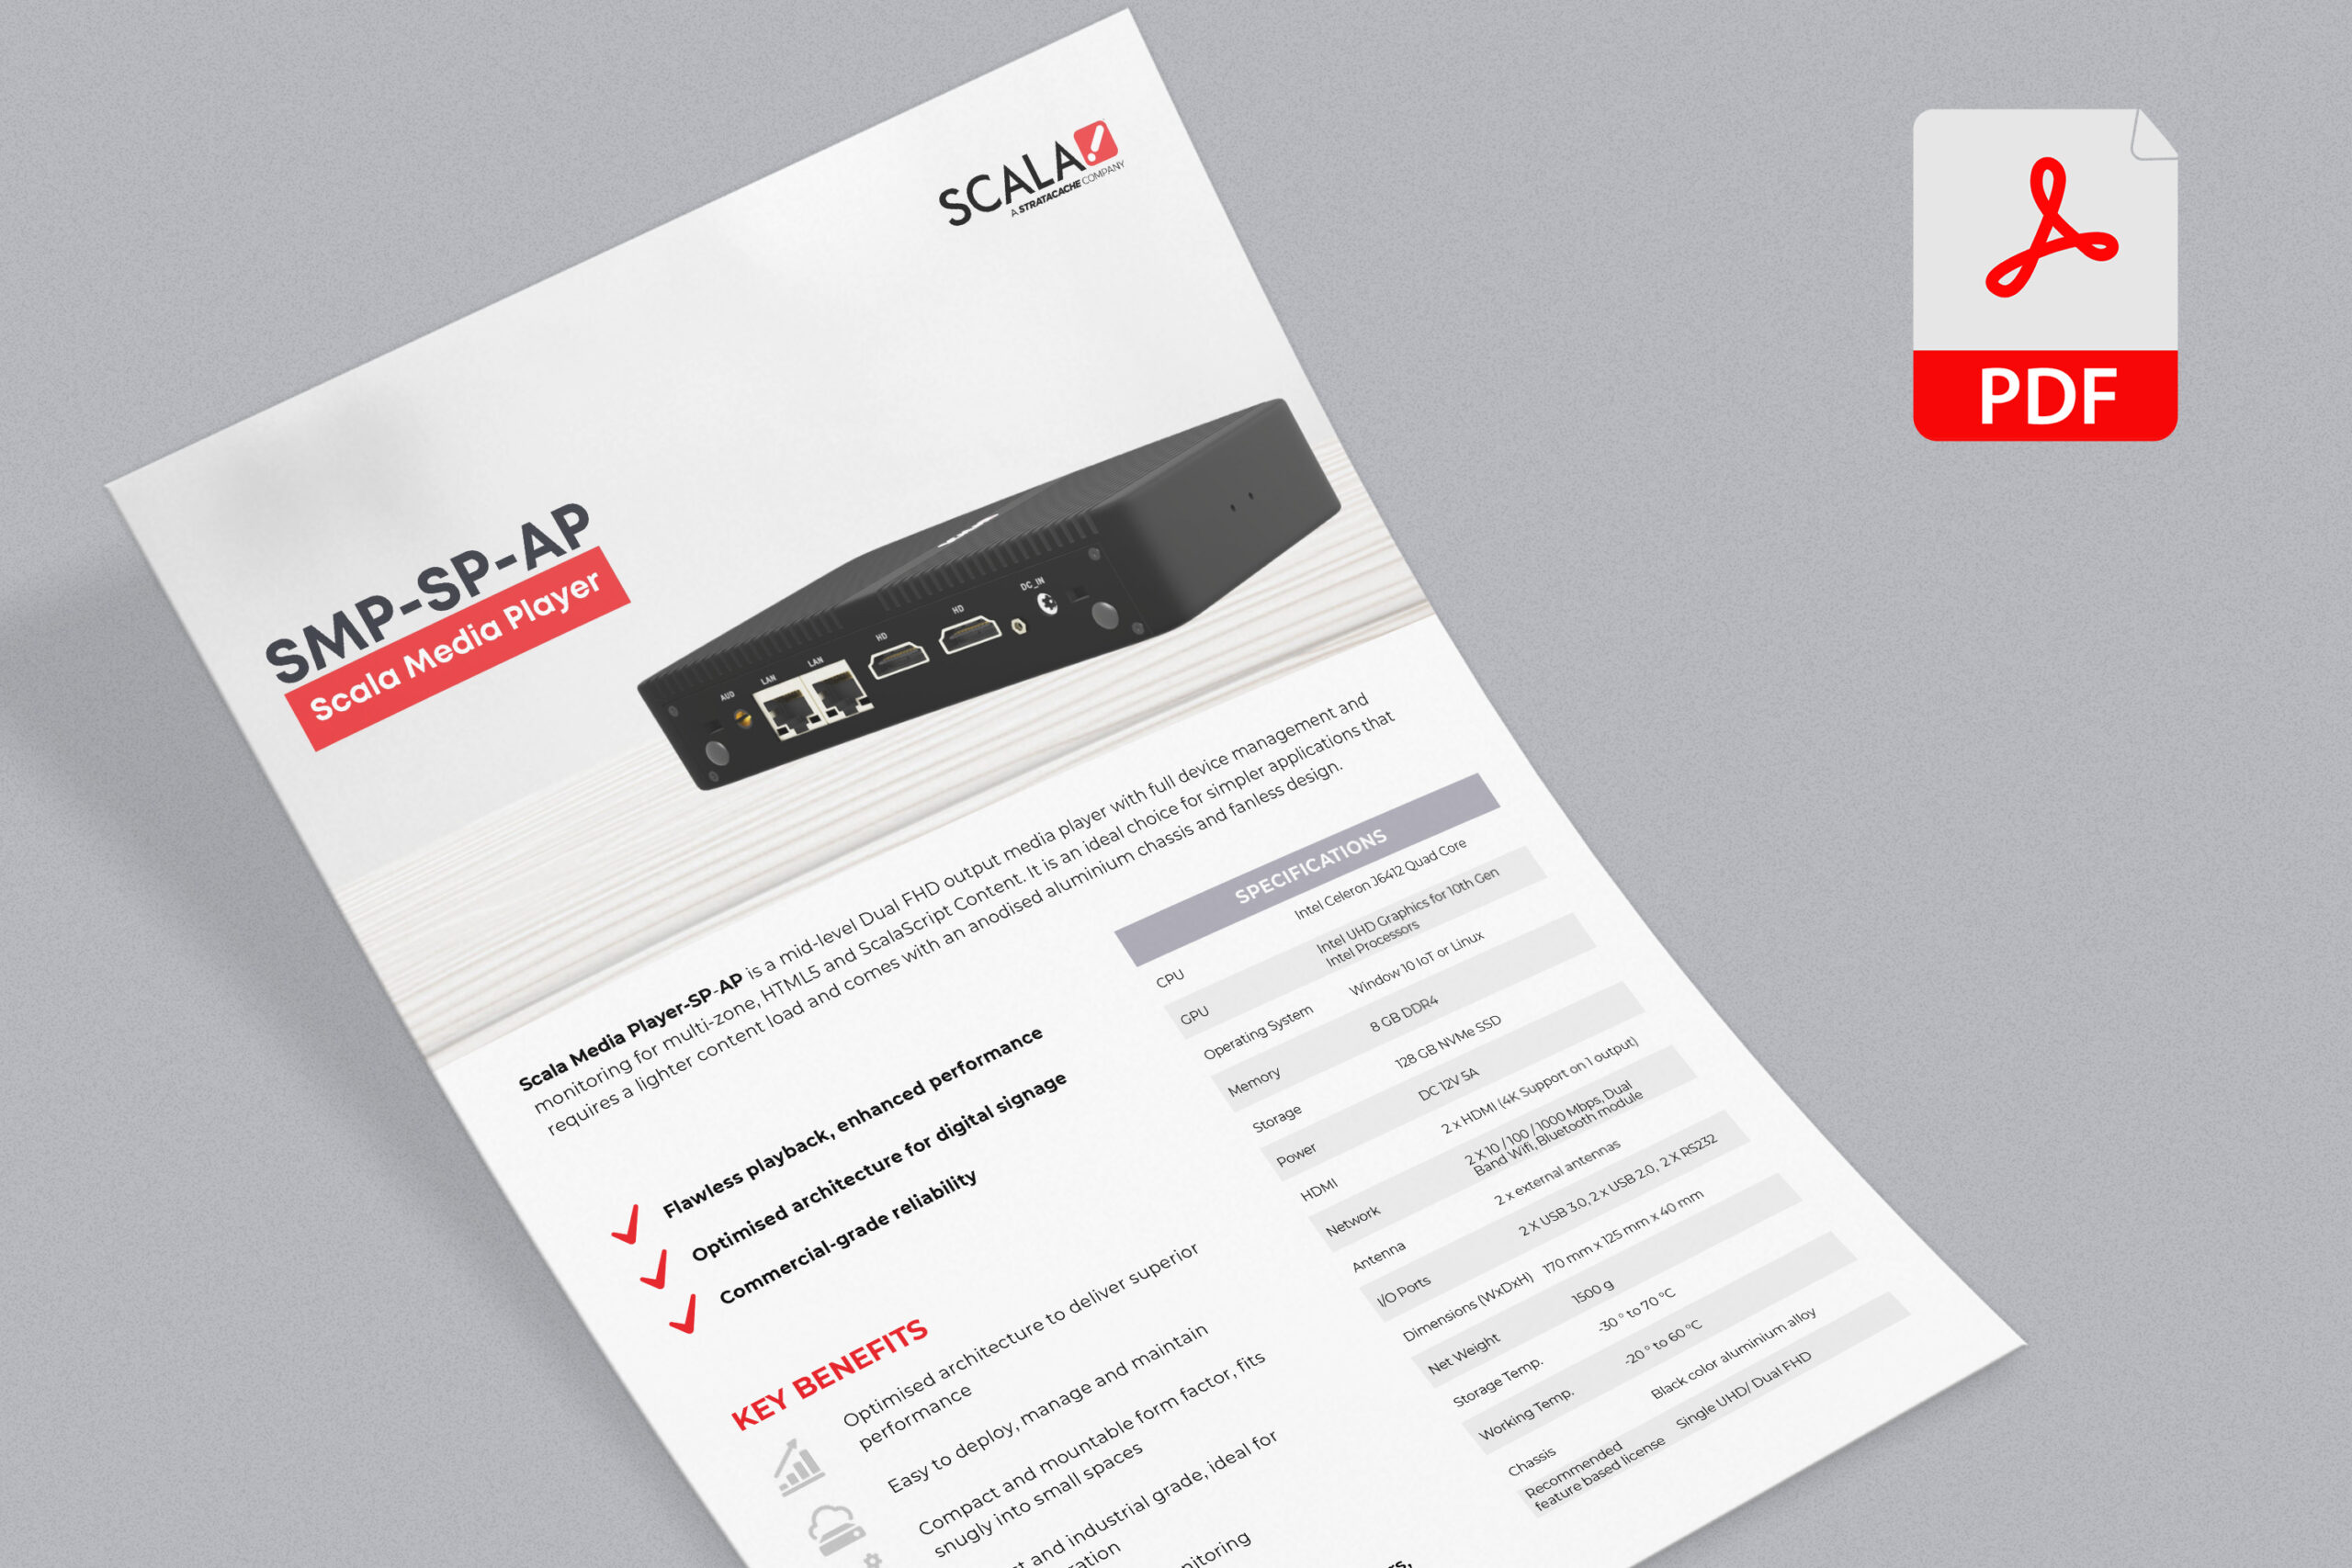 Scala Media Player-SP-AP - Download Brochure